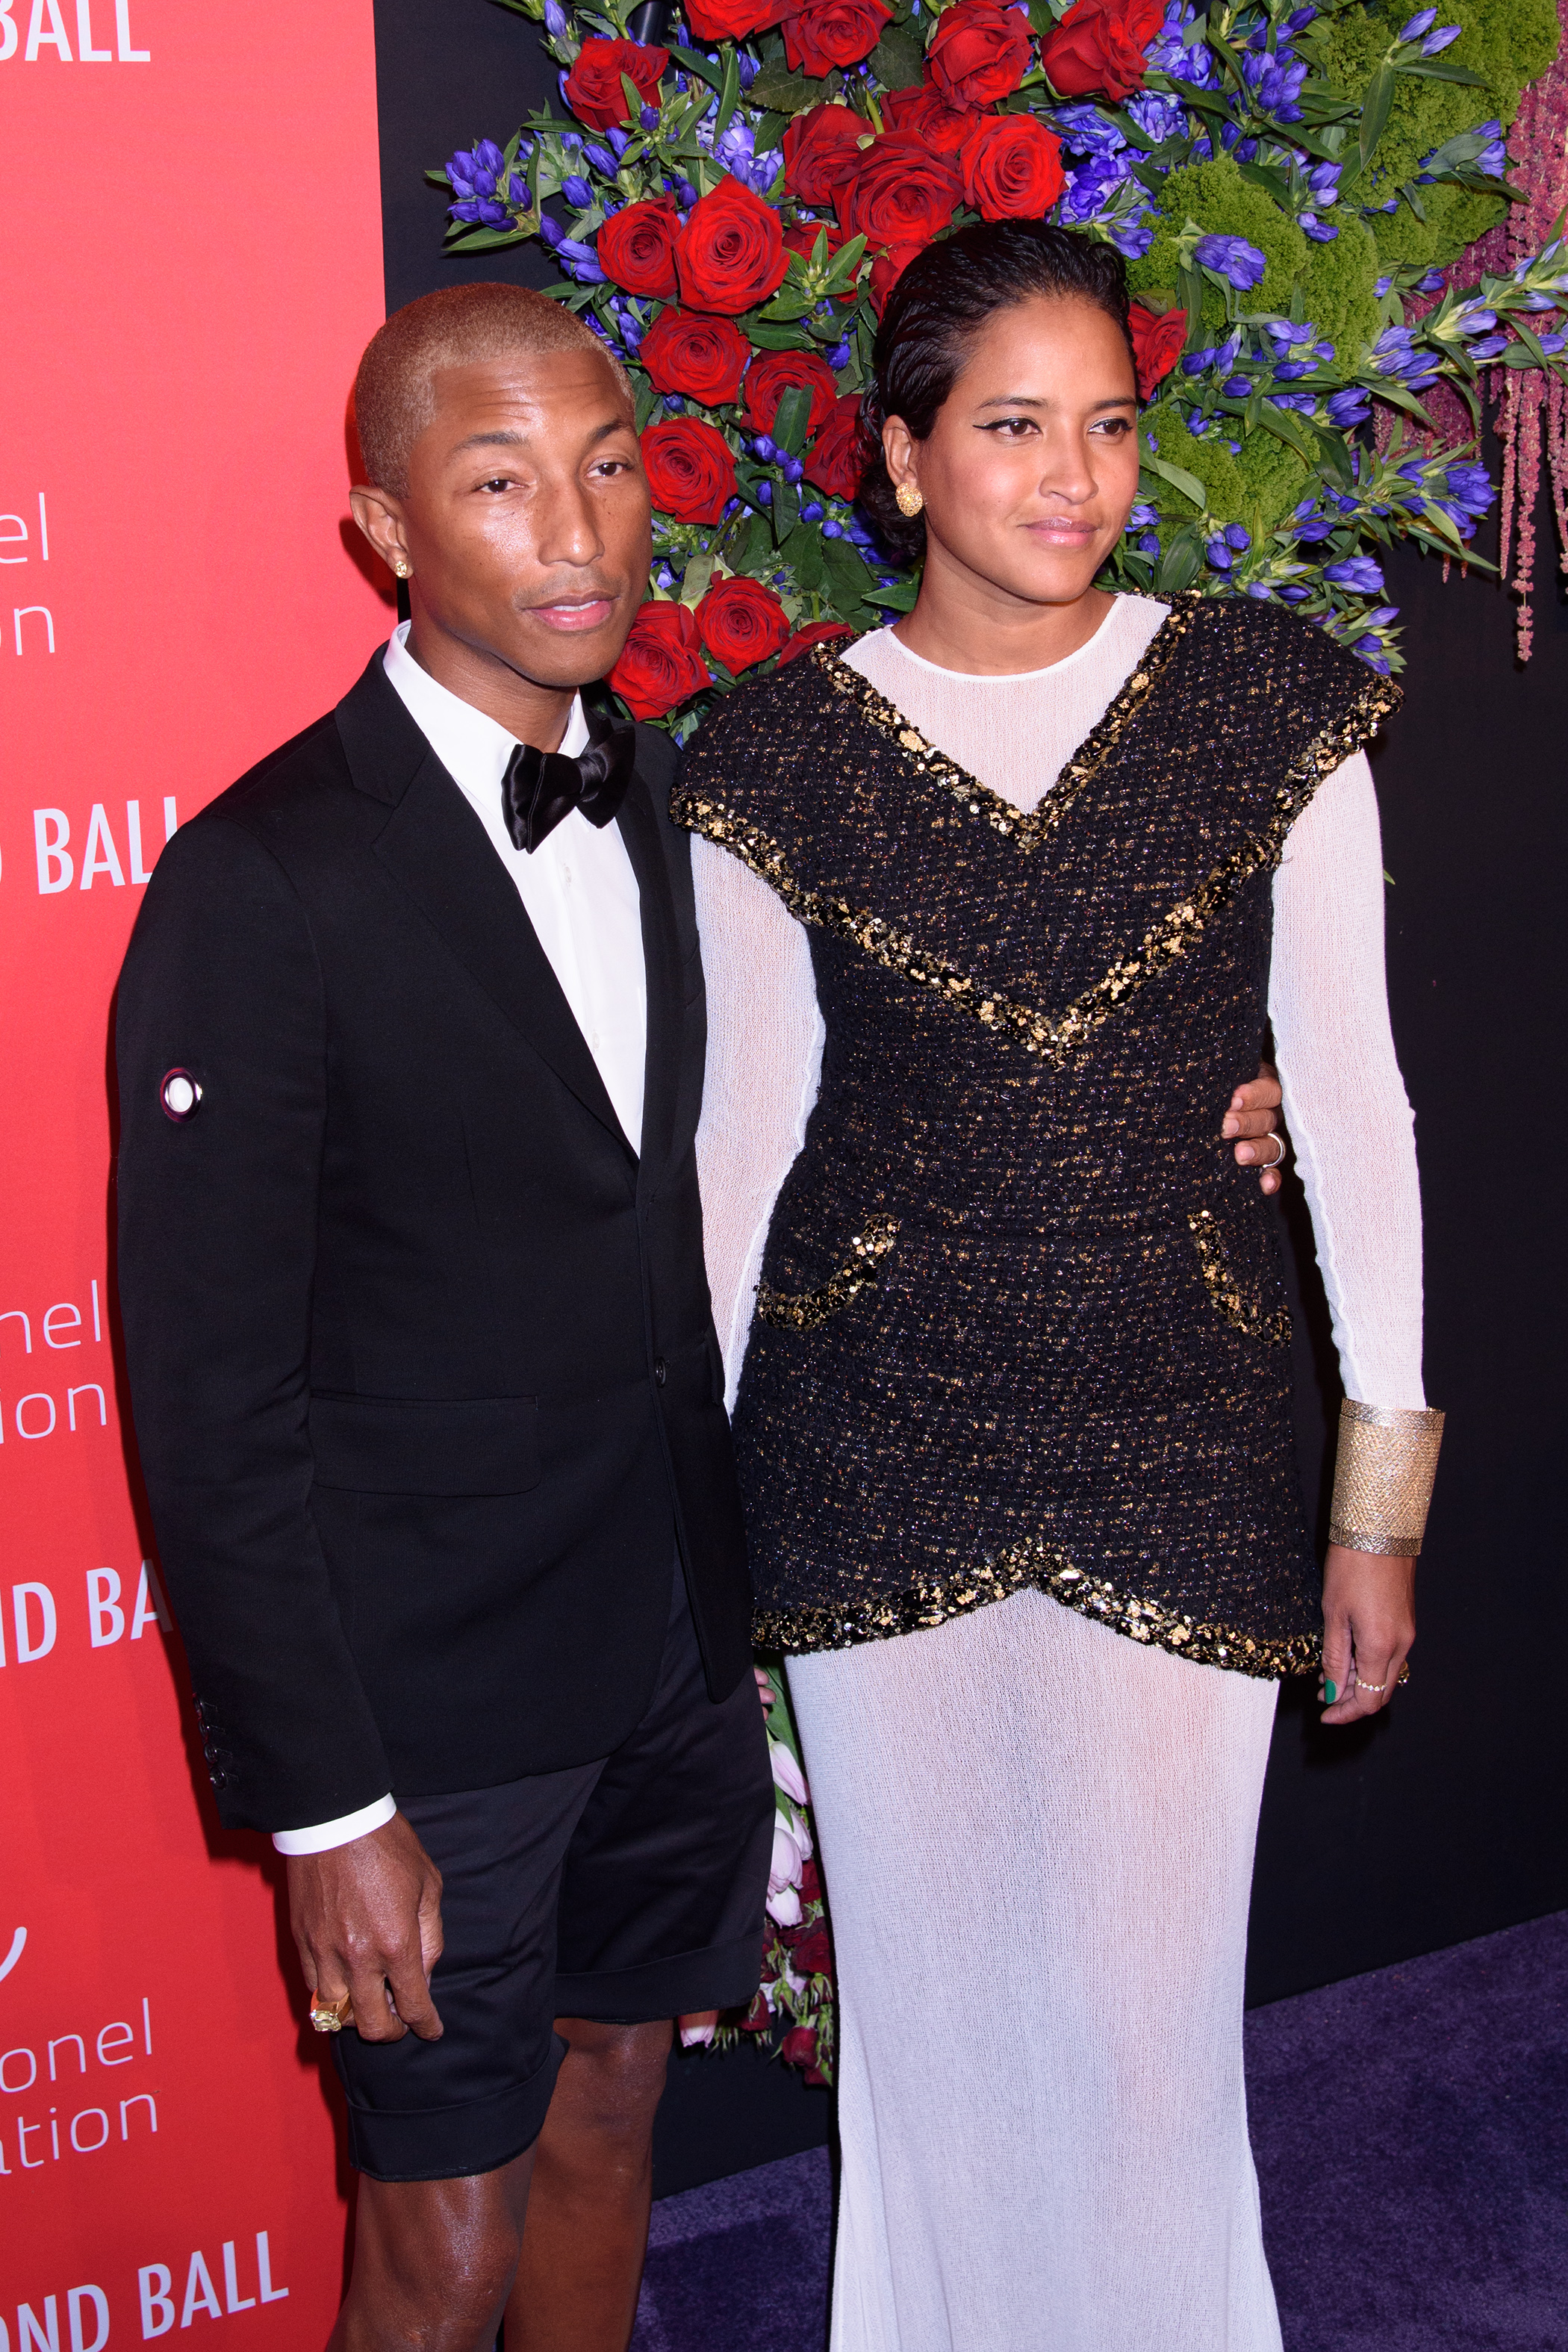 Pharrell and wife